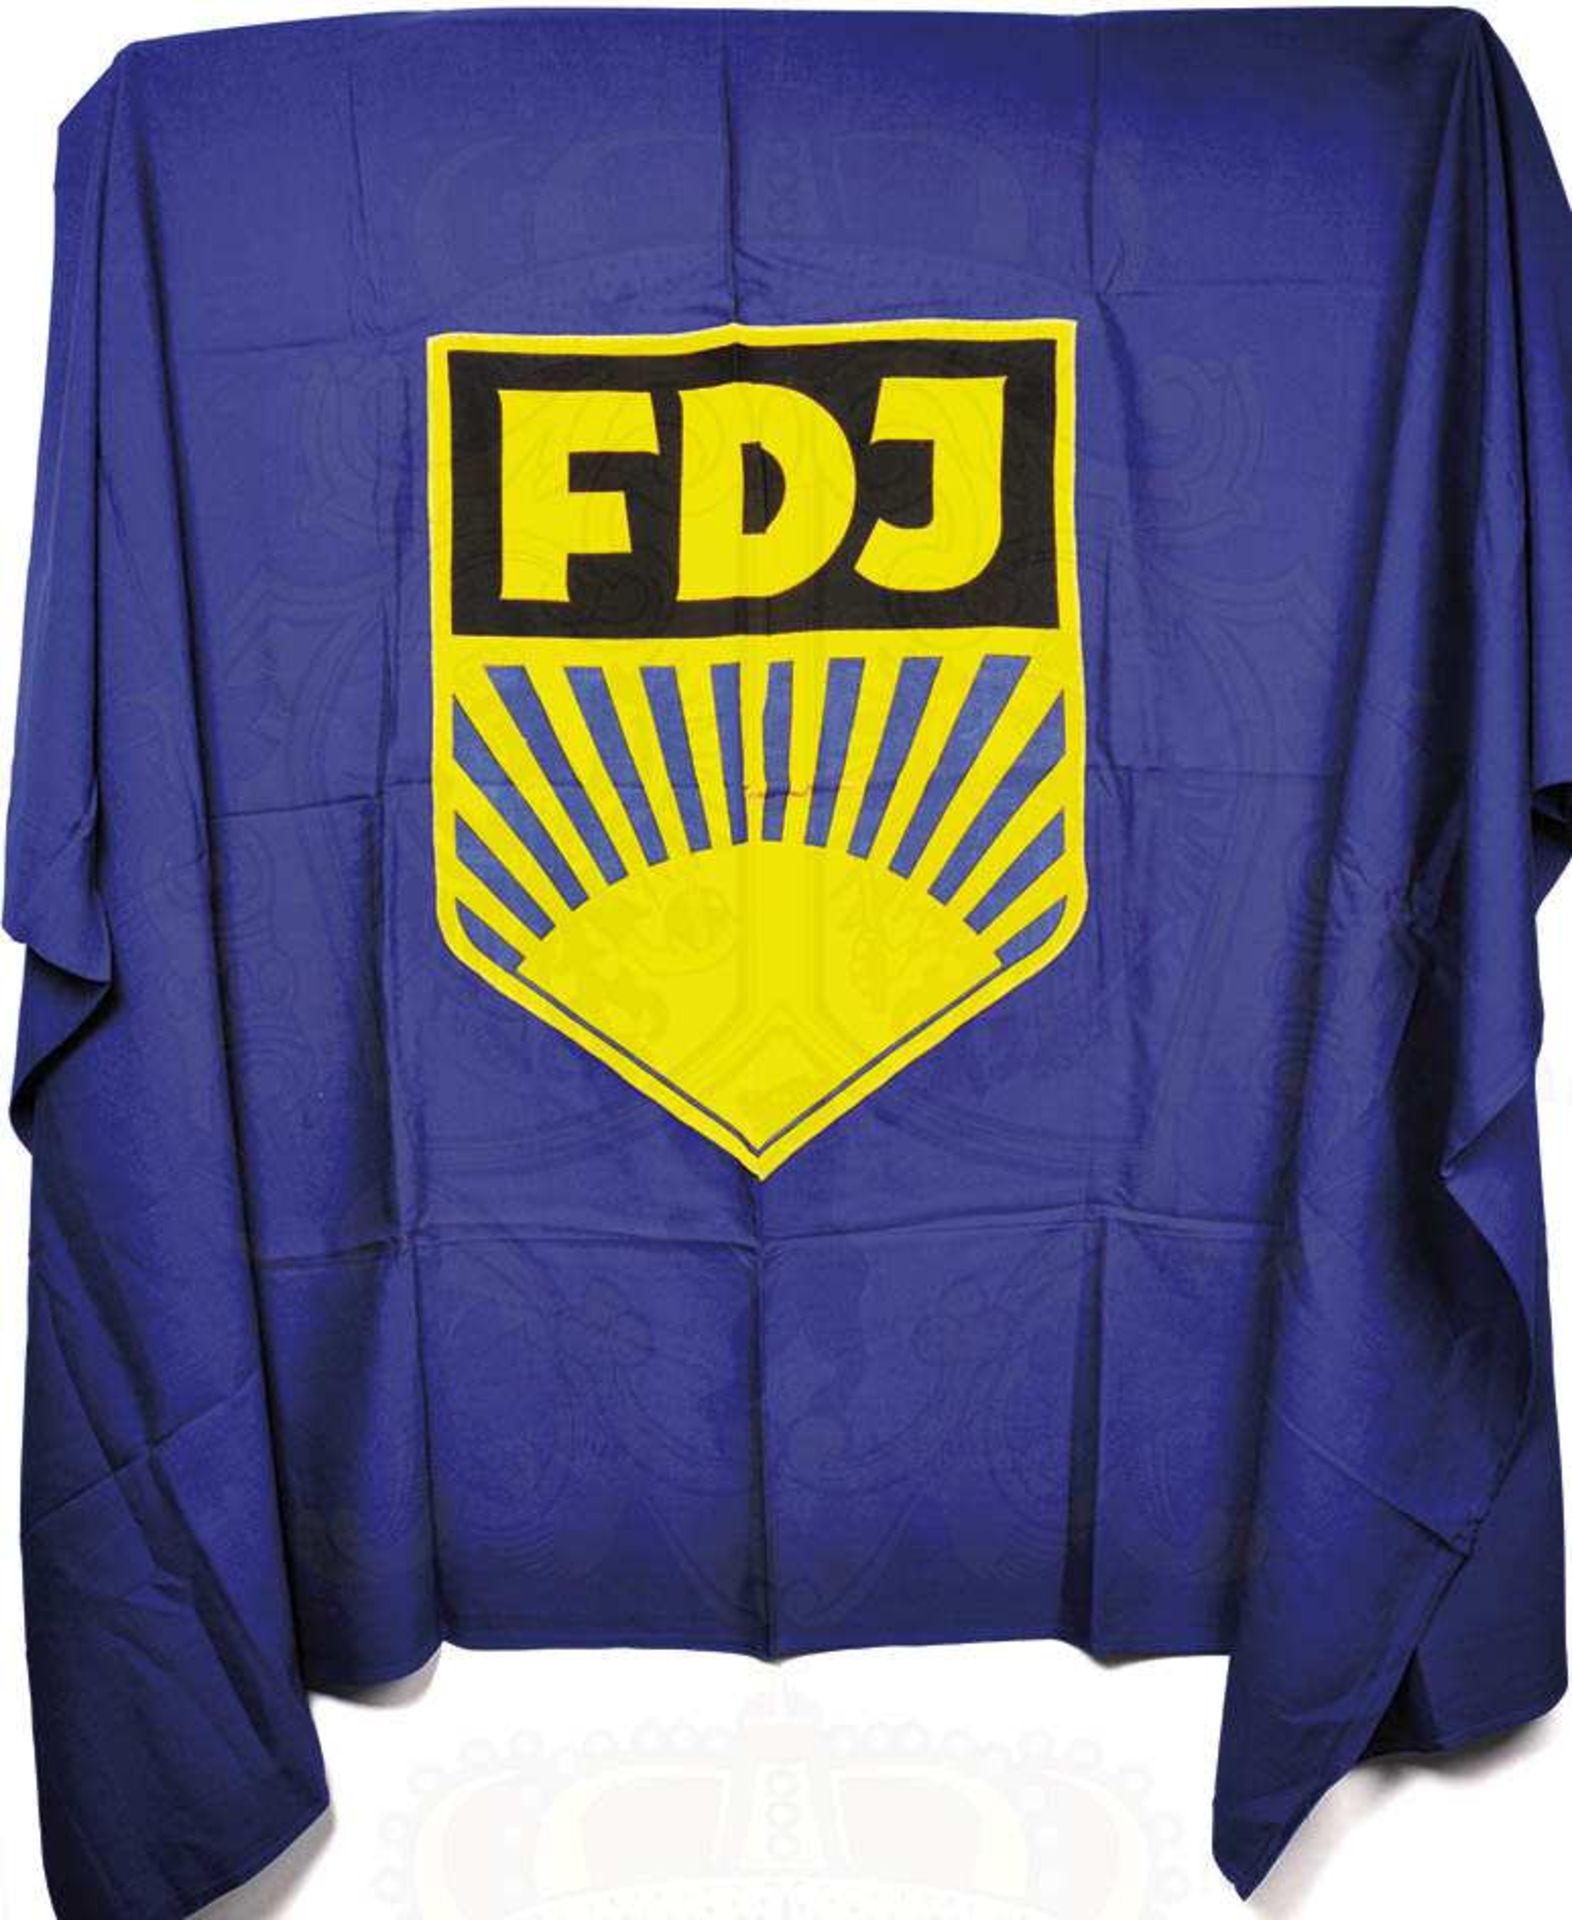 2 FLAGGEN: FDJ u. DSF, blaues bzw. weißes Tuch, mittig gedruckte Embleme, 180x115 cm < 1048010F,